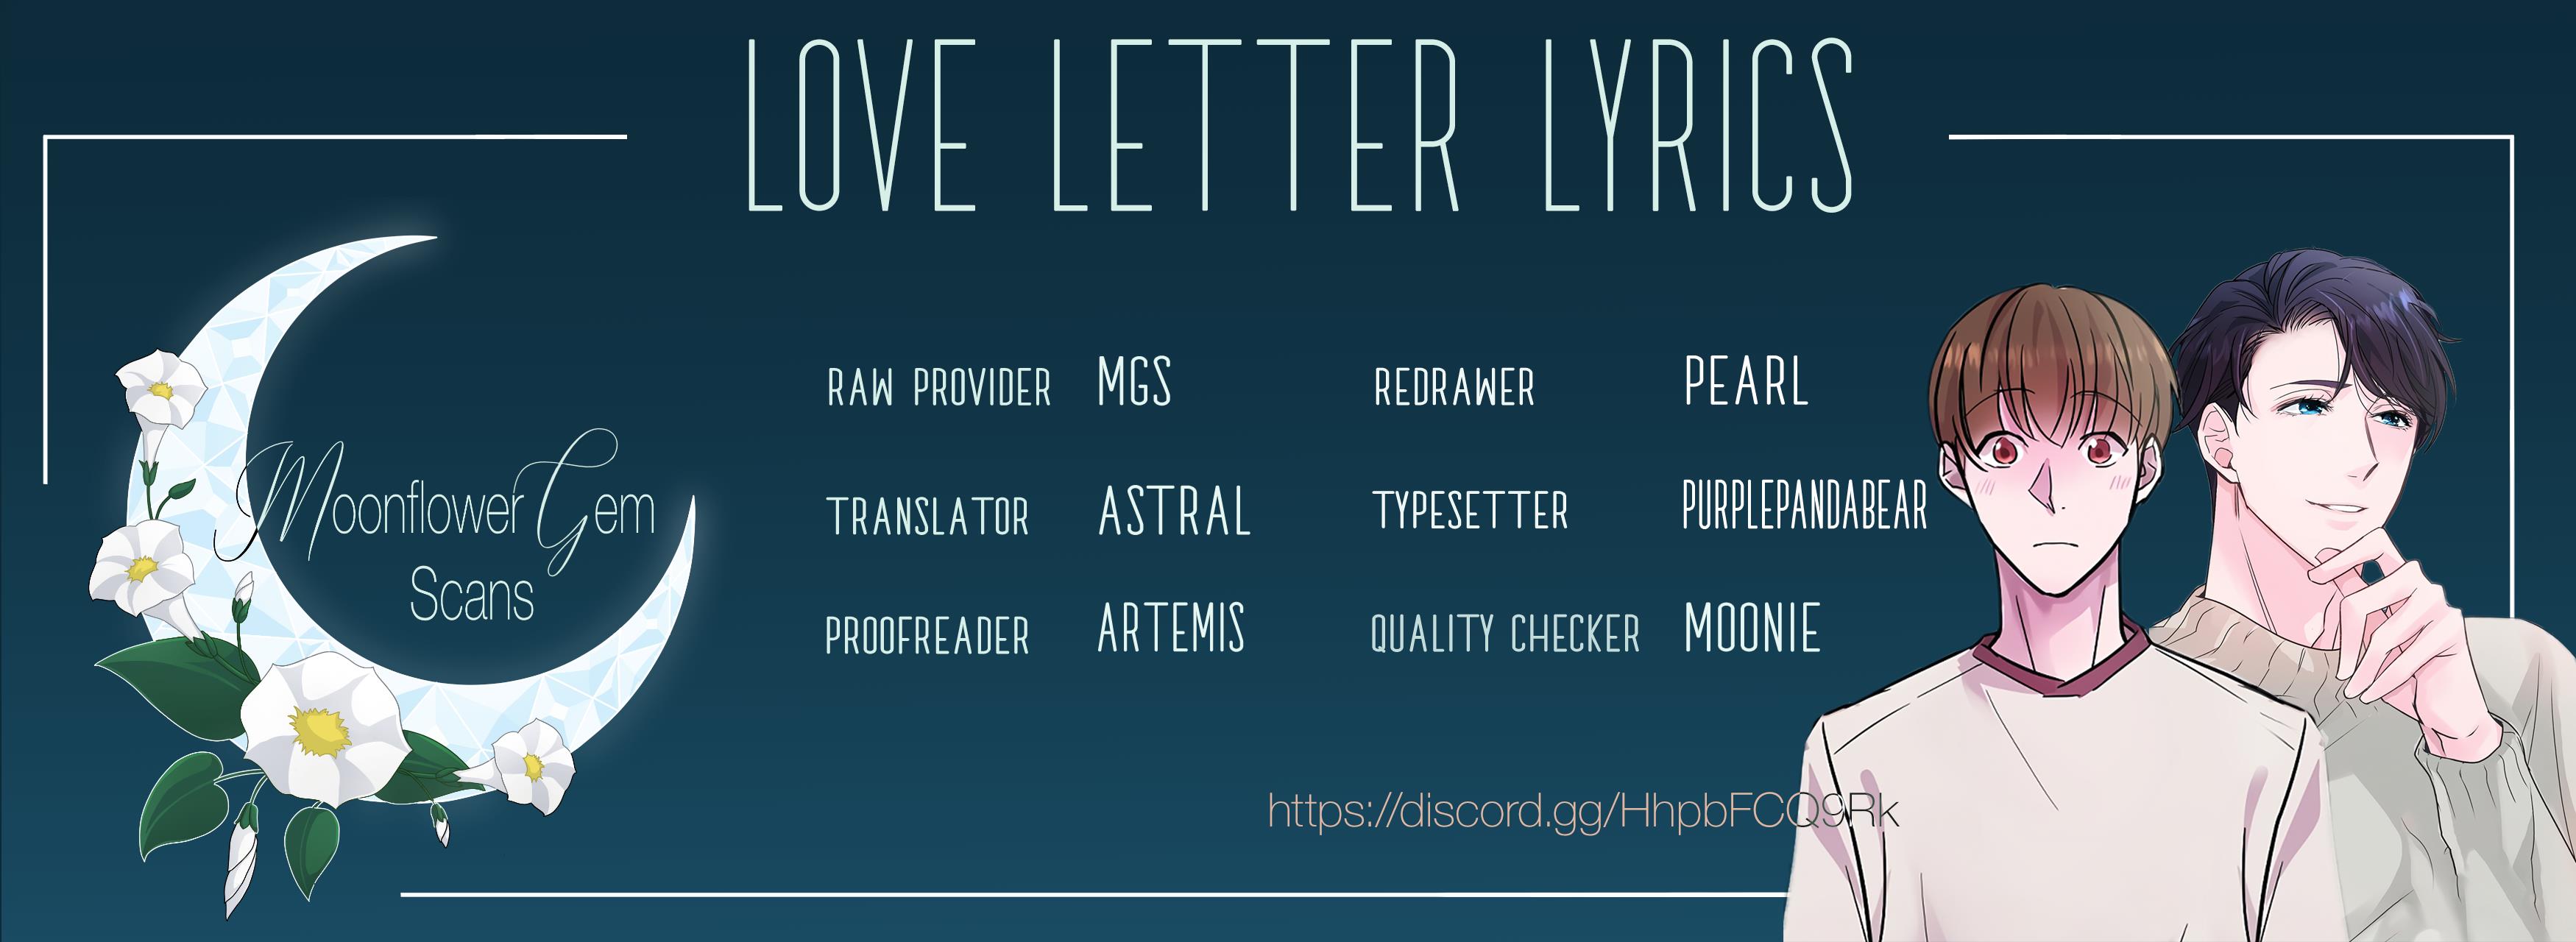 Love Letter Lyrics - Page 1